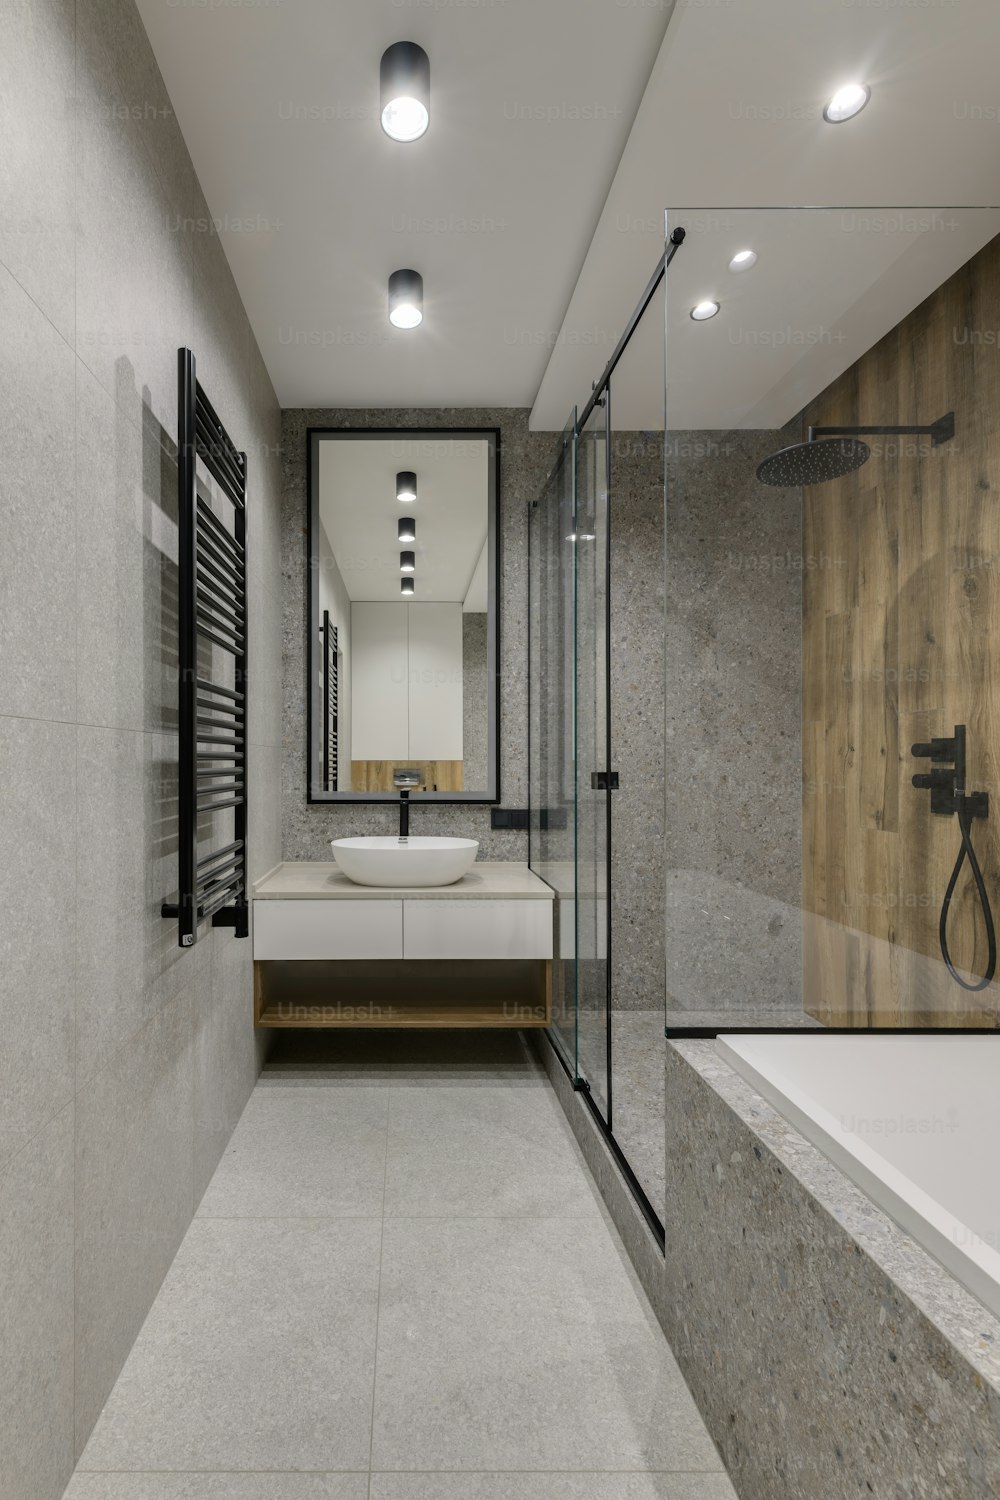 a bathroom with a tub, sink, and mirror